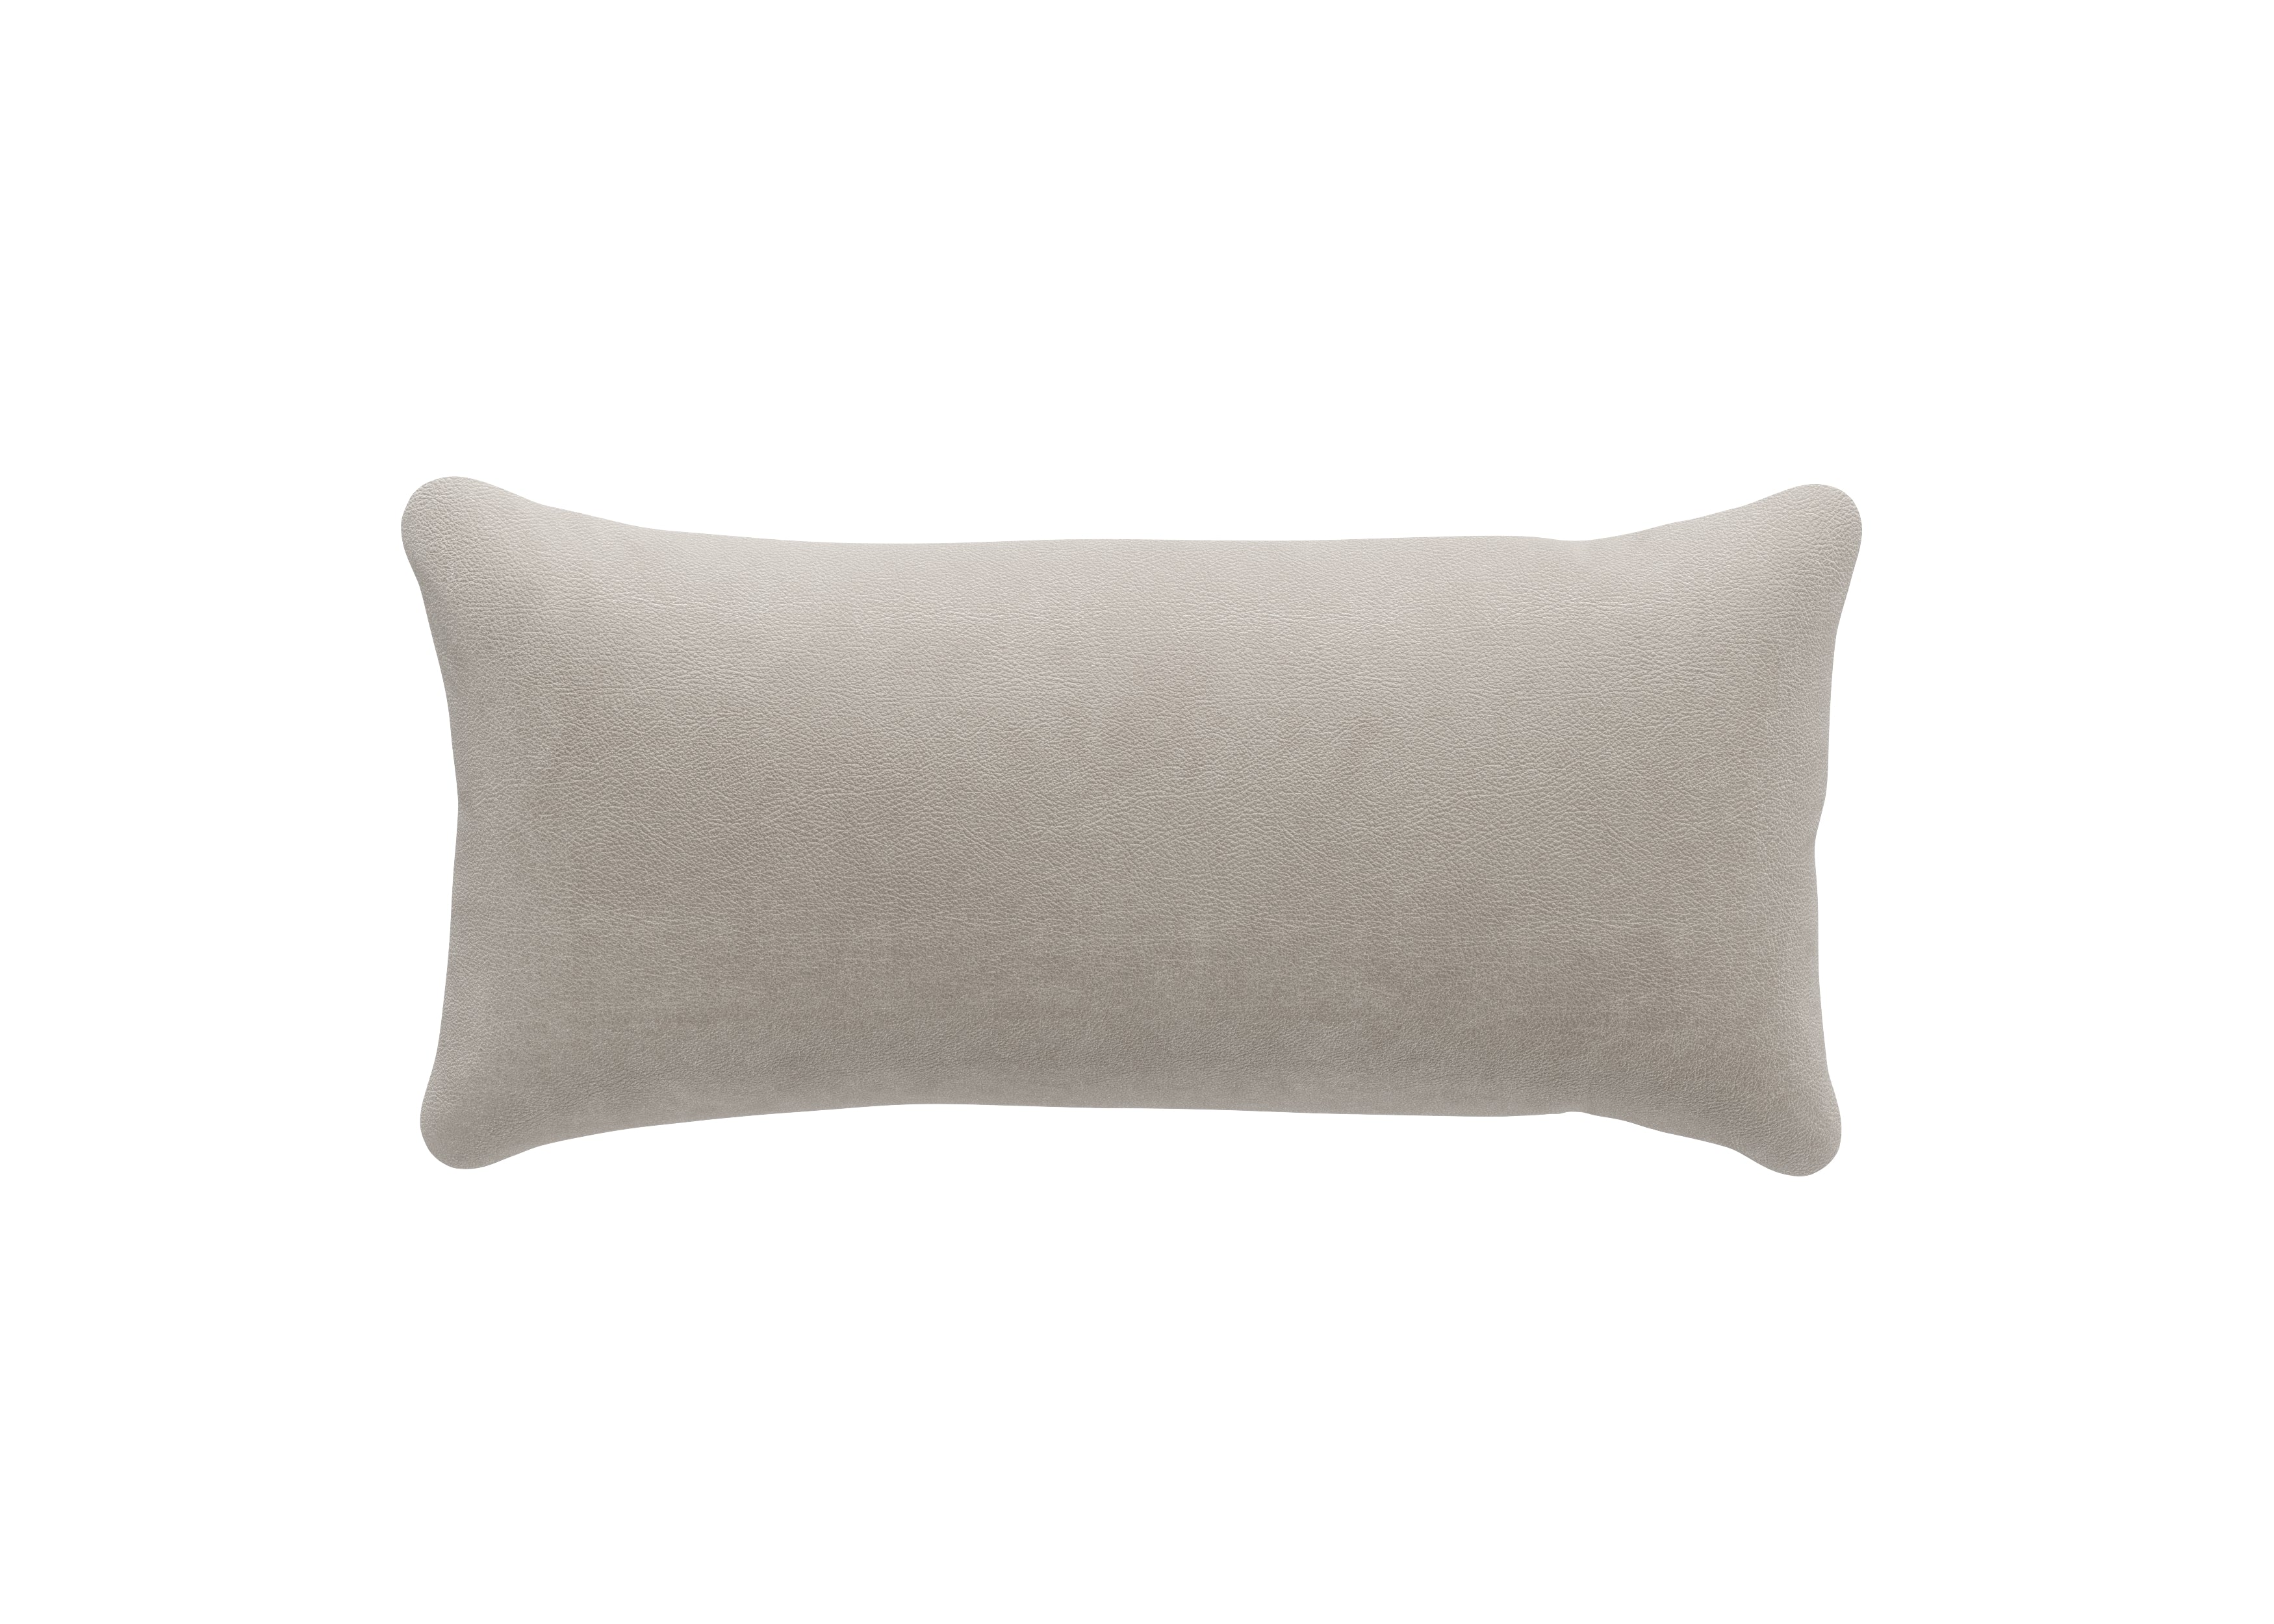 pillow - leather - light grey